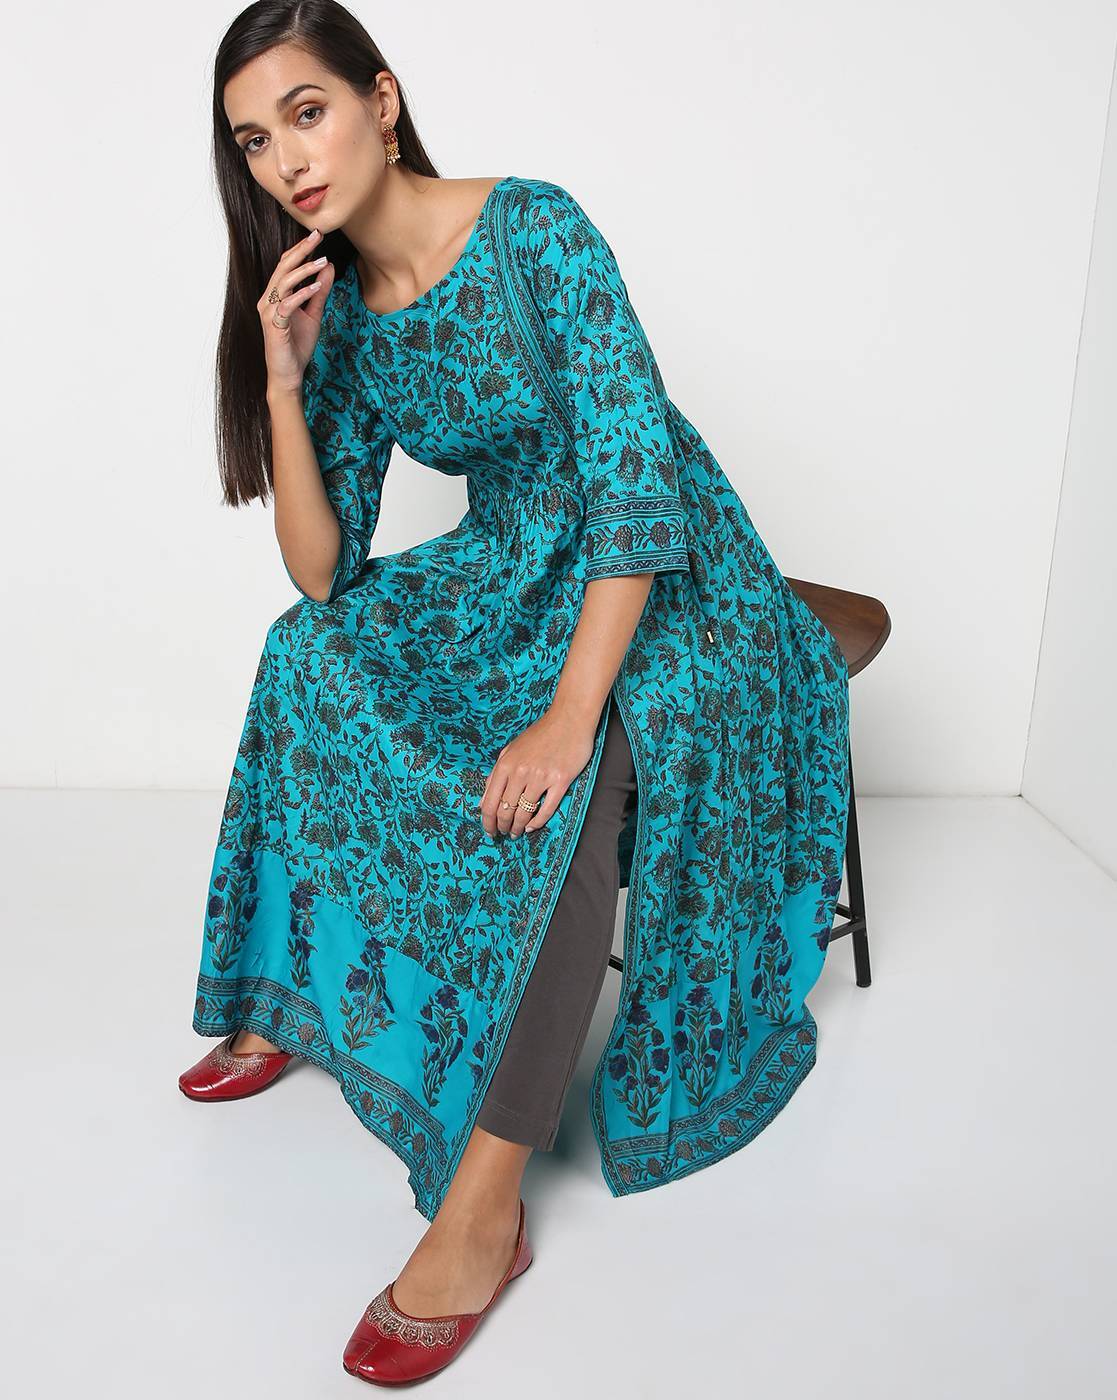 Urmul Hand Embroidered Handloom Cotton Kurta by Indie Picks Online | Ajio.com  | Women, Dresses with sleeves, Fashion